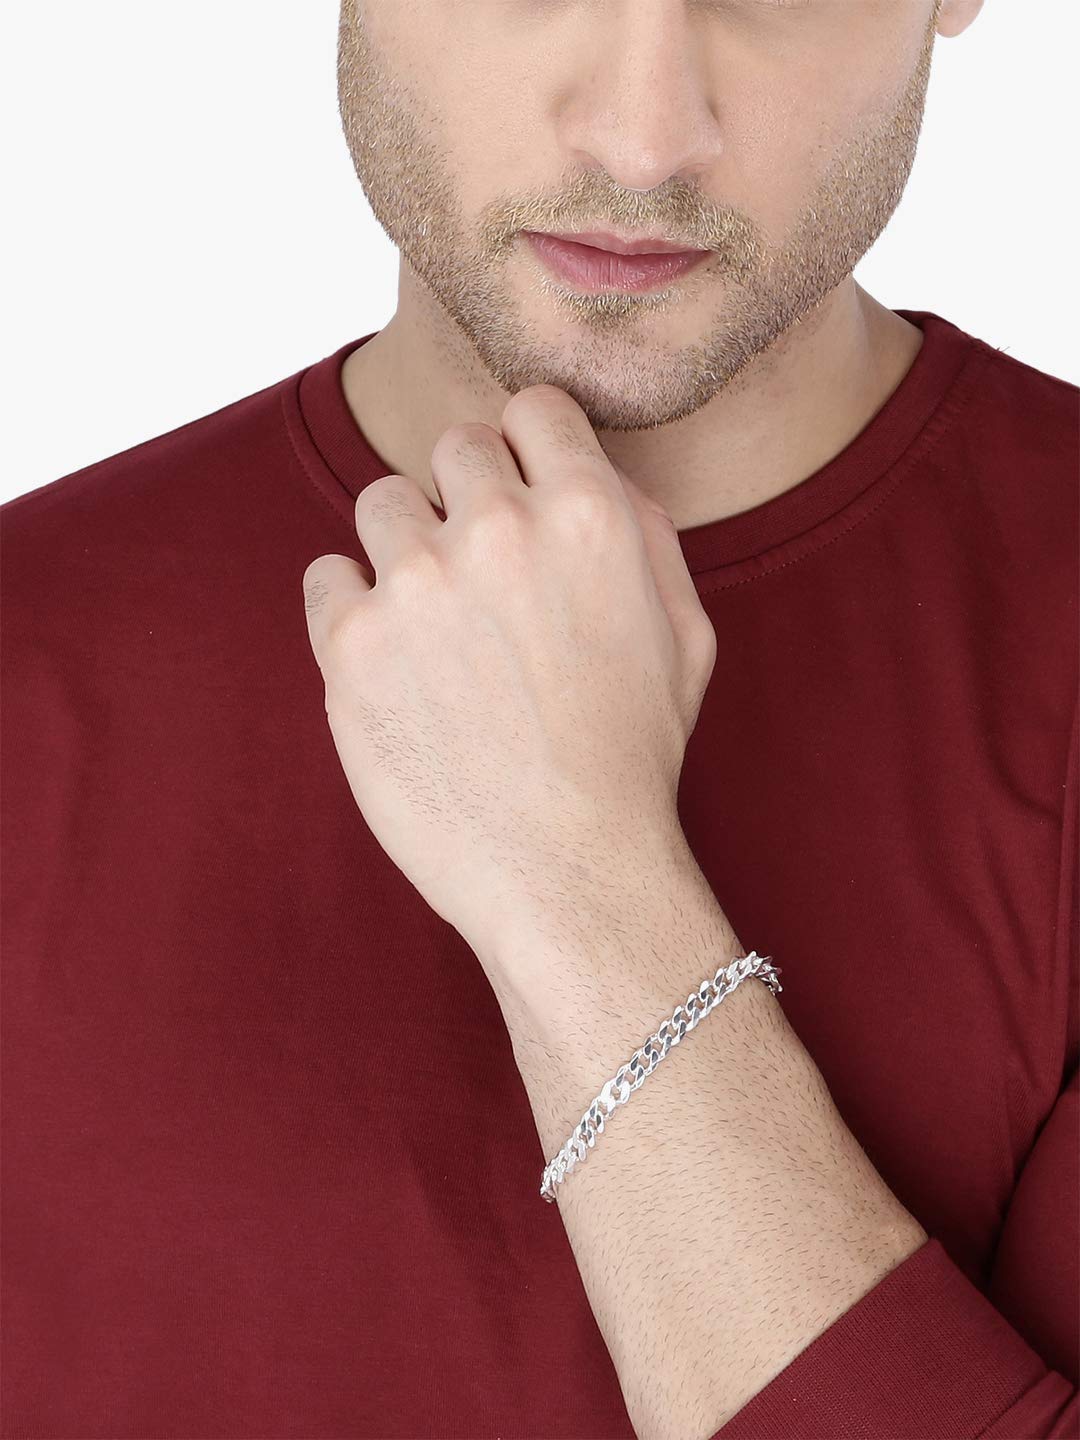 43% OFF on Silverwala Silver Silver Bracelet for Men & Boys on Amazon |  PaisaWapas.com